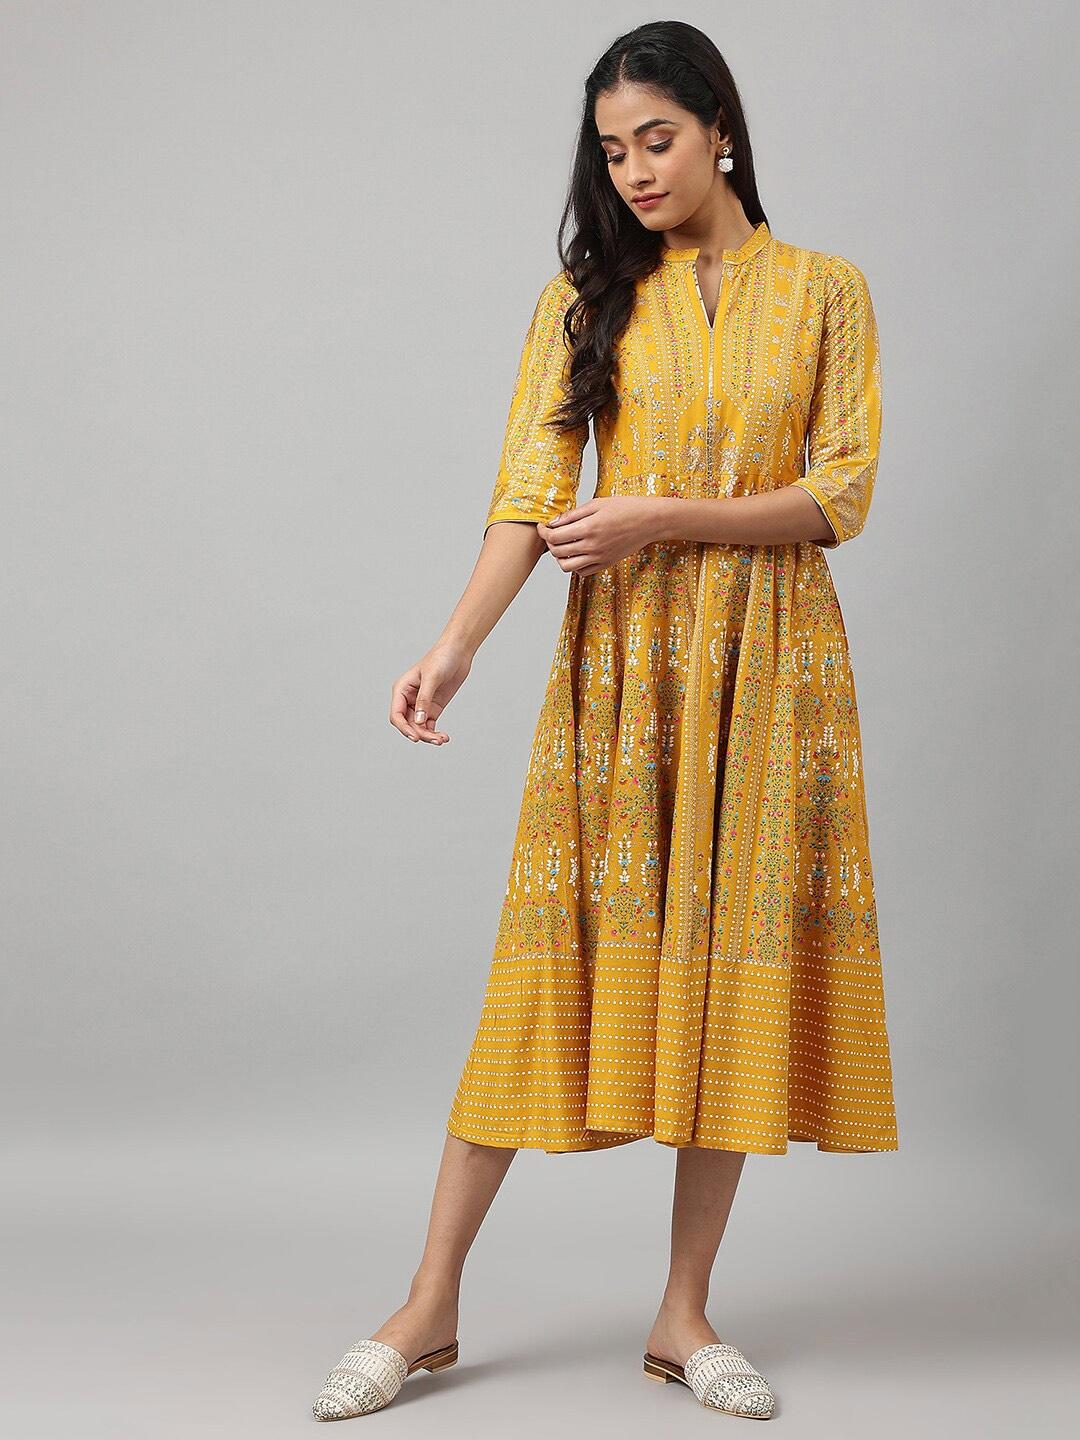 w-yellow-ethnic-motifs-chiffon-ethnic-a-line-midi-dress